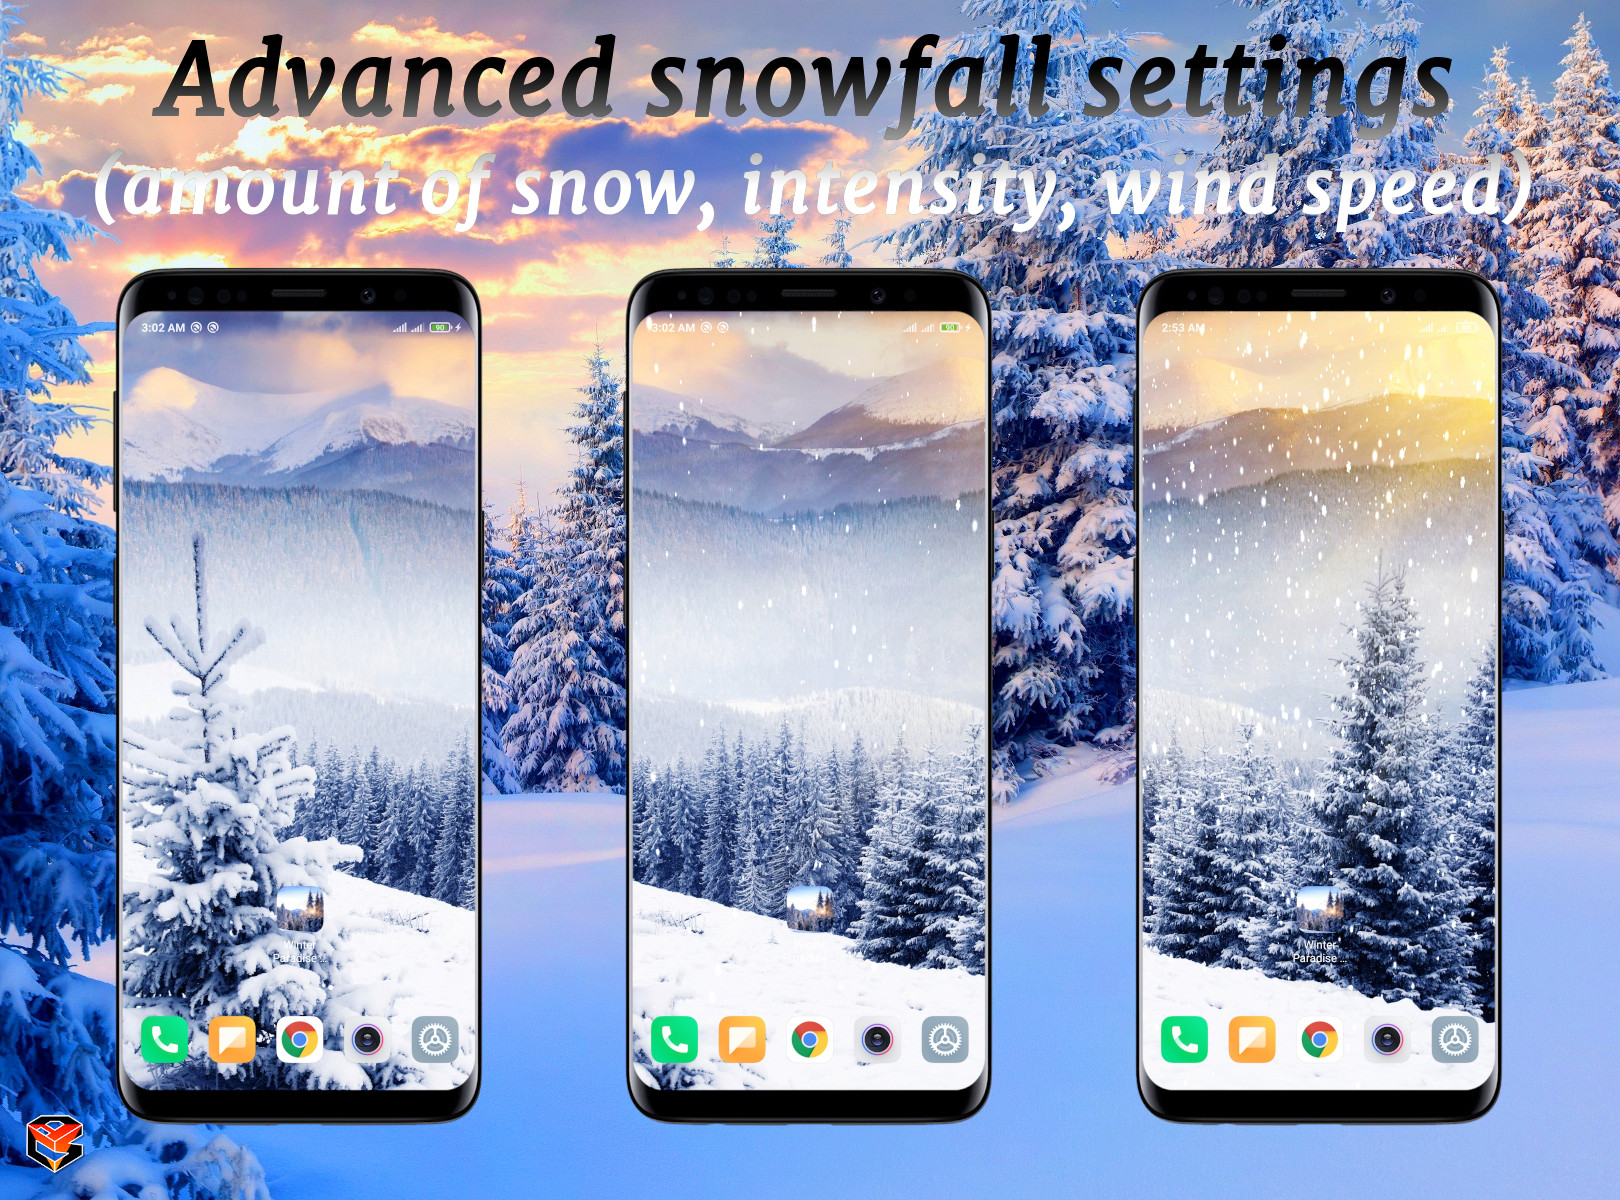 Snow_settings_1_eng.jpg